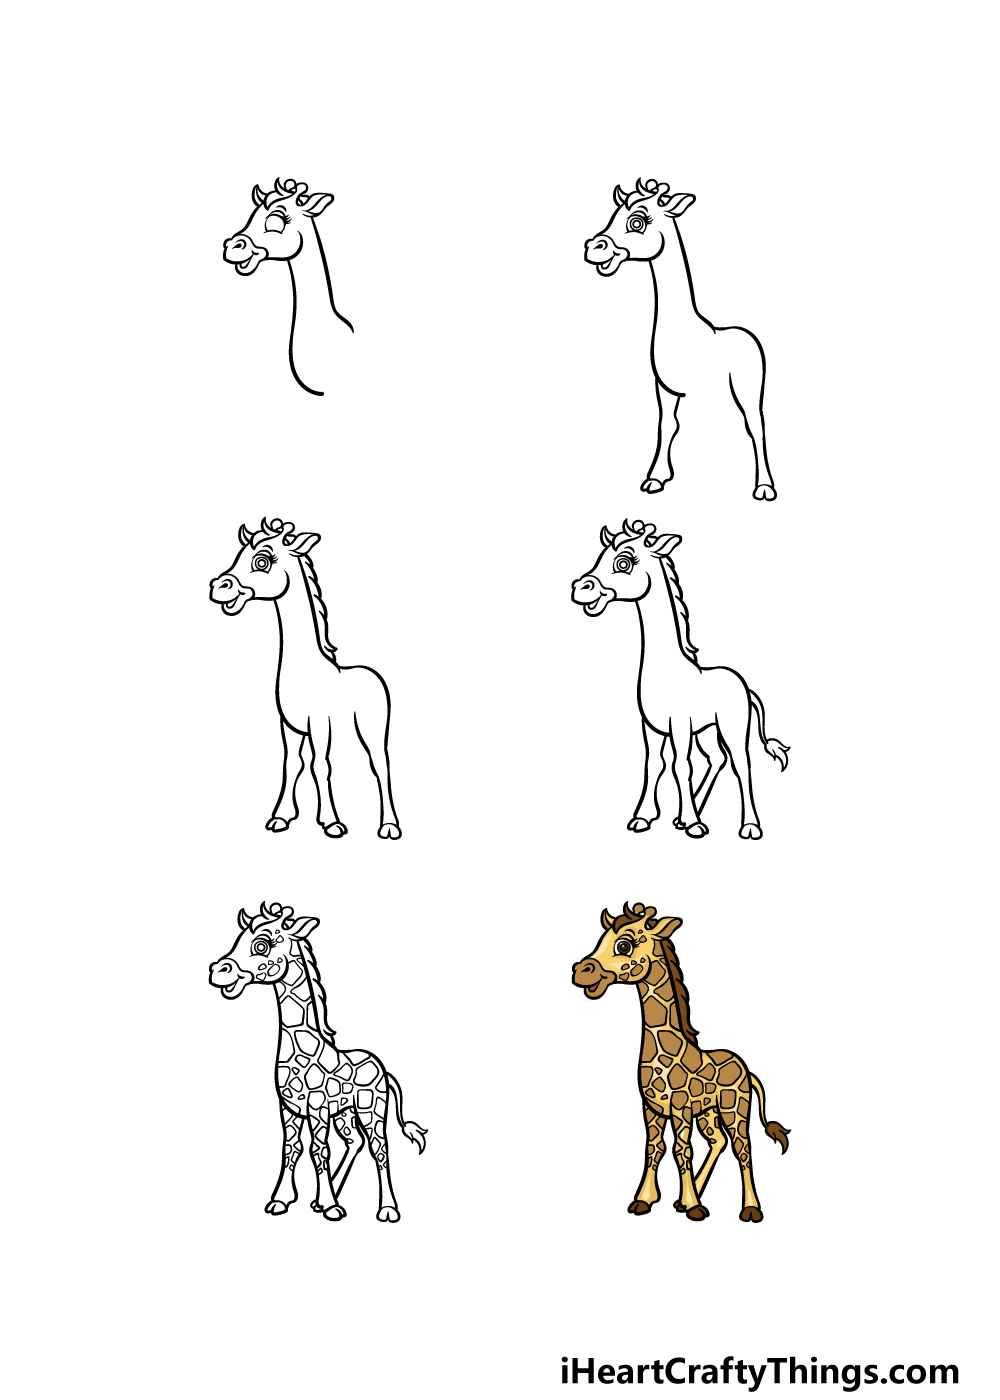 Cartoon Giraffe Drawing - How To Draw A Cartoon Giraffe Step By Step